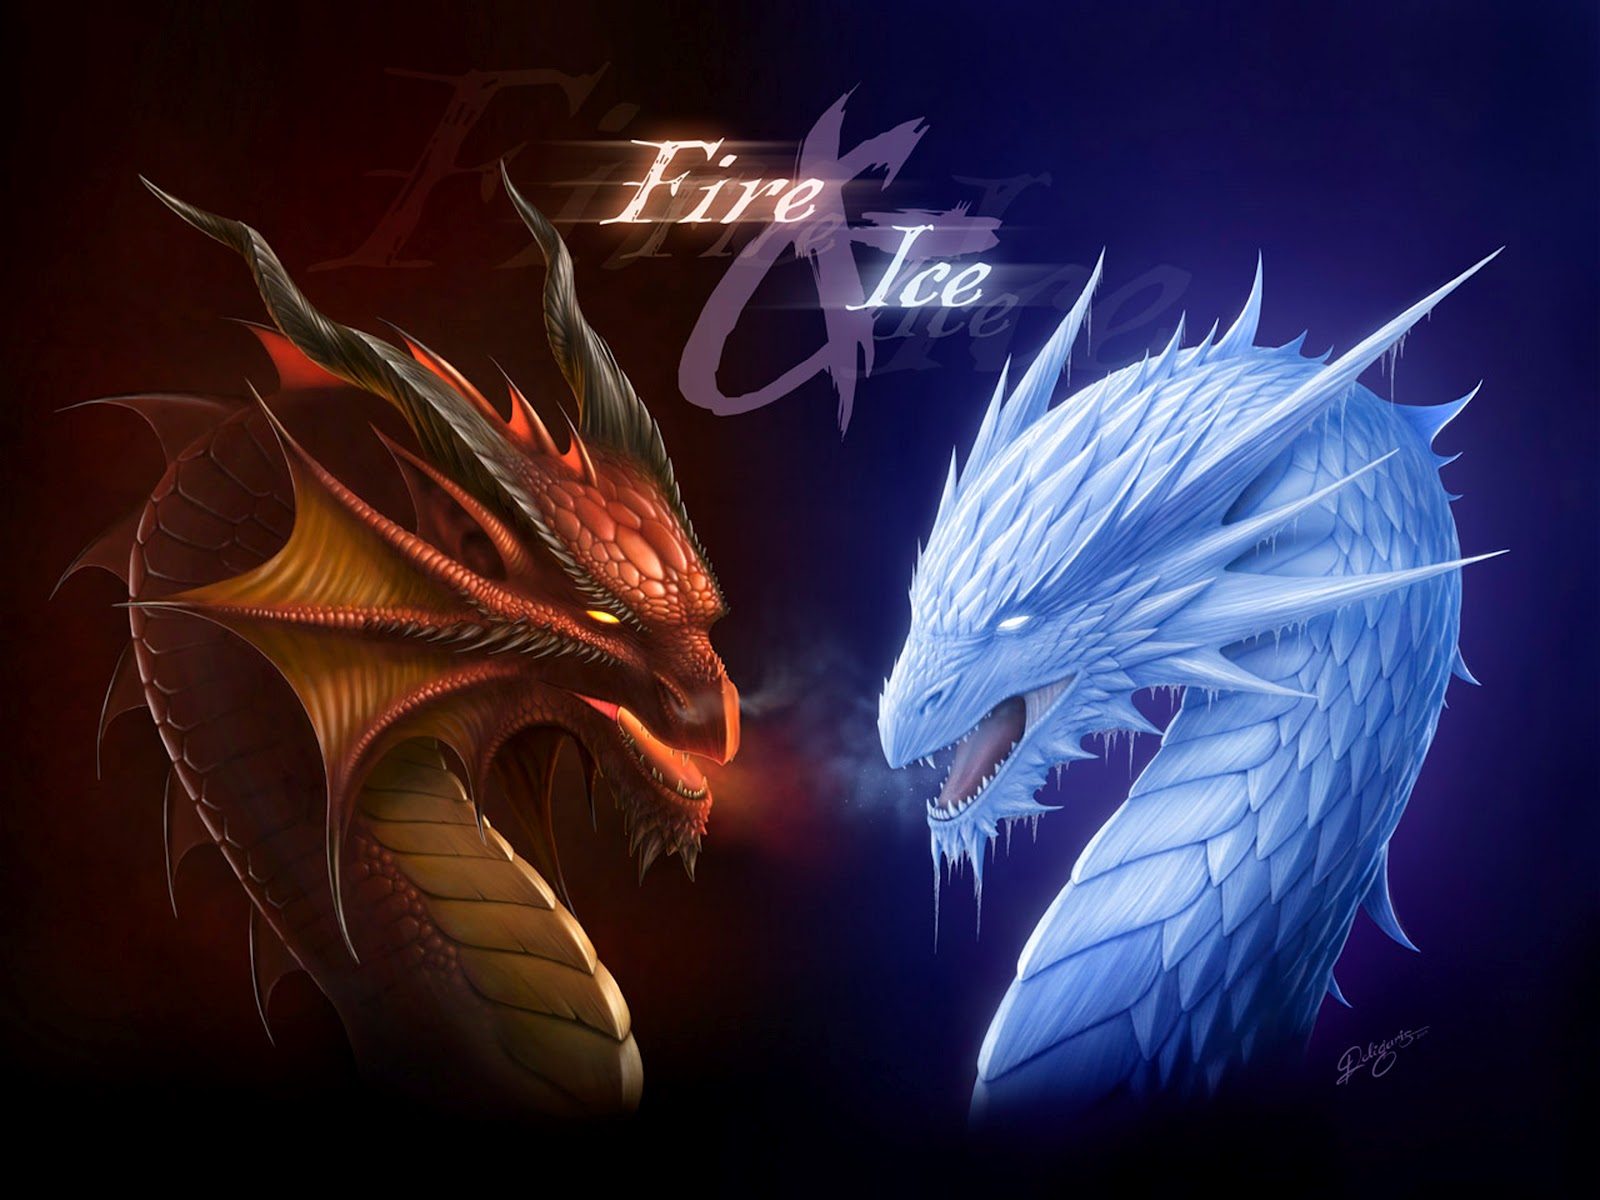 Fire Dragon Ice Head Poster Wallpaper Concept Art Design